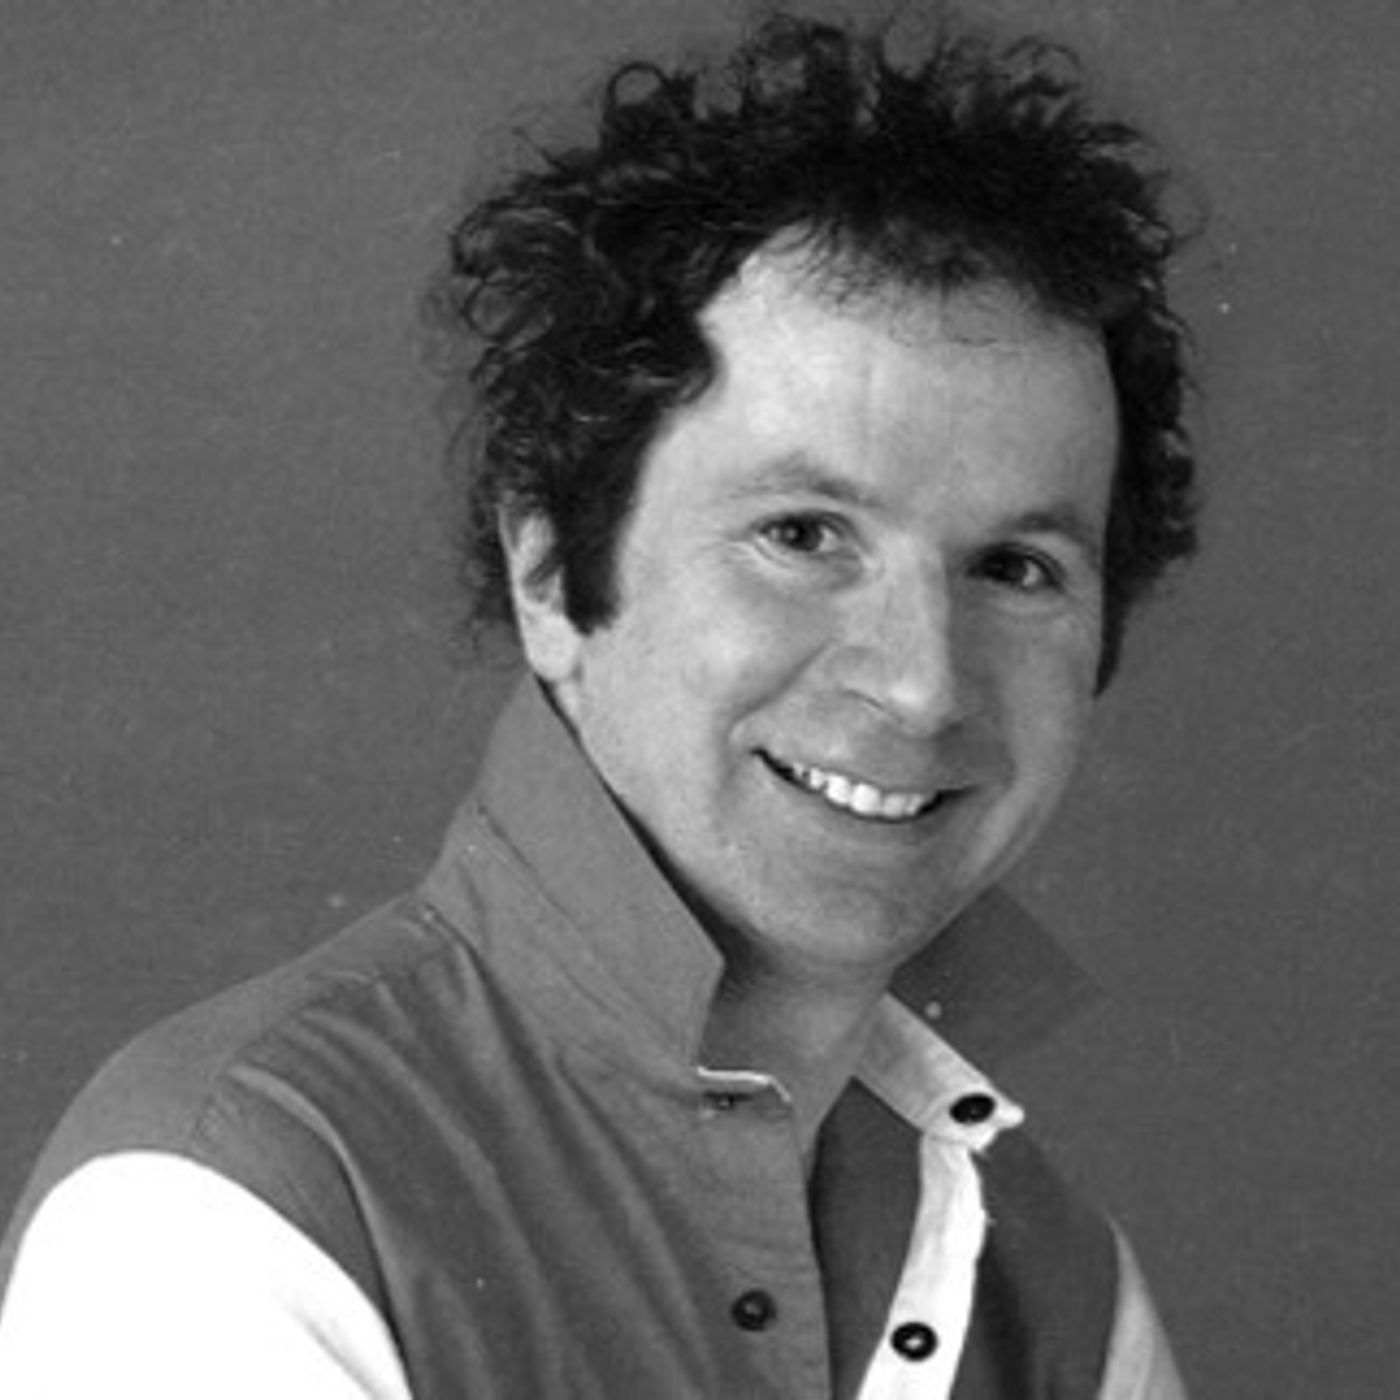 87: Adrian Juste - Radio presenter at Radio 1, BRMB and Radio Leicester